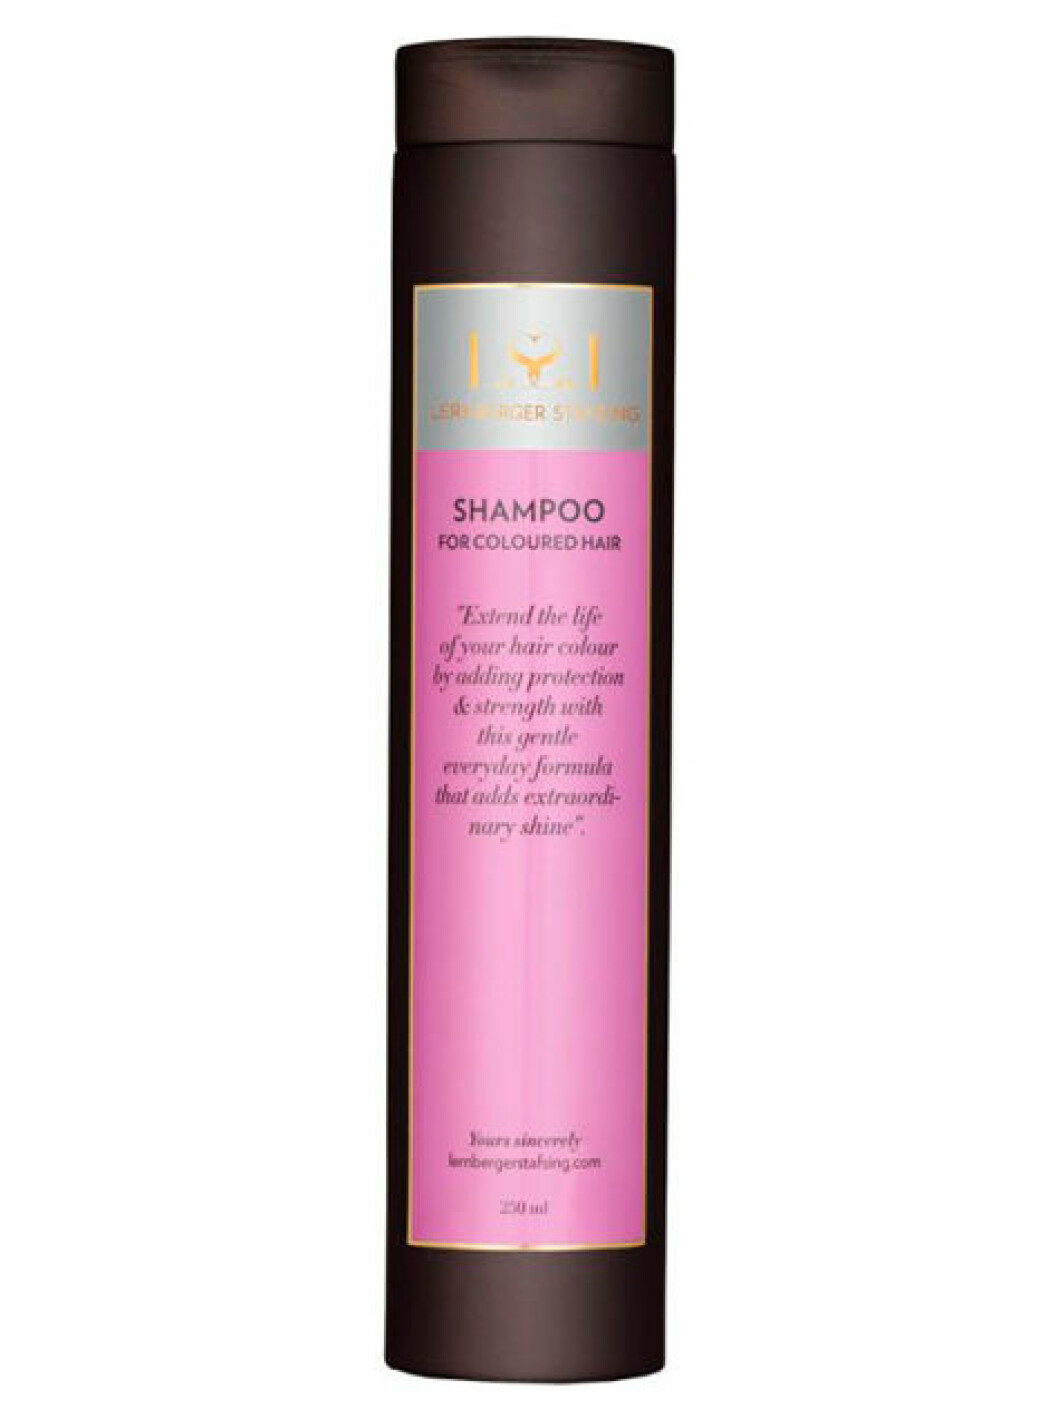 Shampoo for coloured hair, ca 189 kr/60 ml, Lernberger Stafsing. 